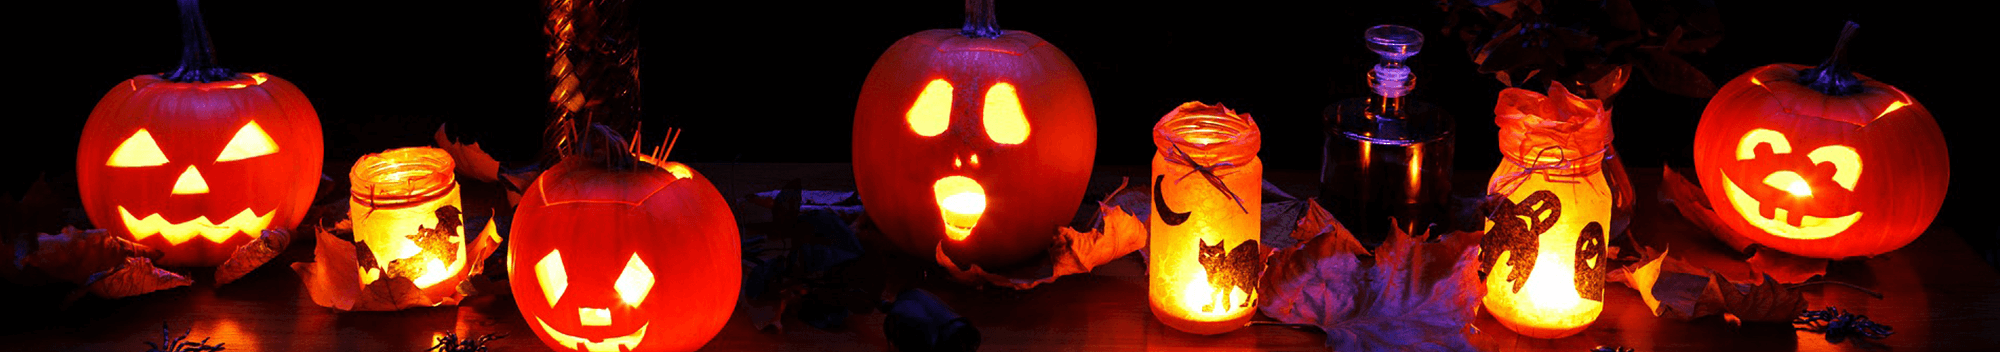 Pumpkin Carving Survival Guide